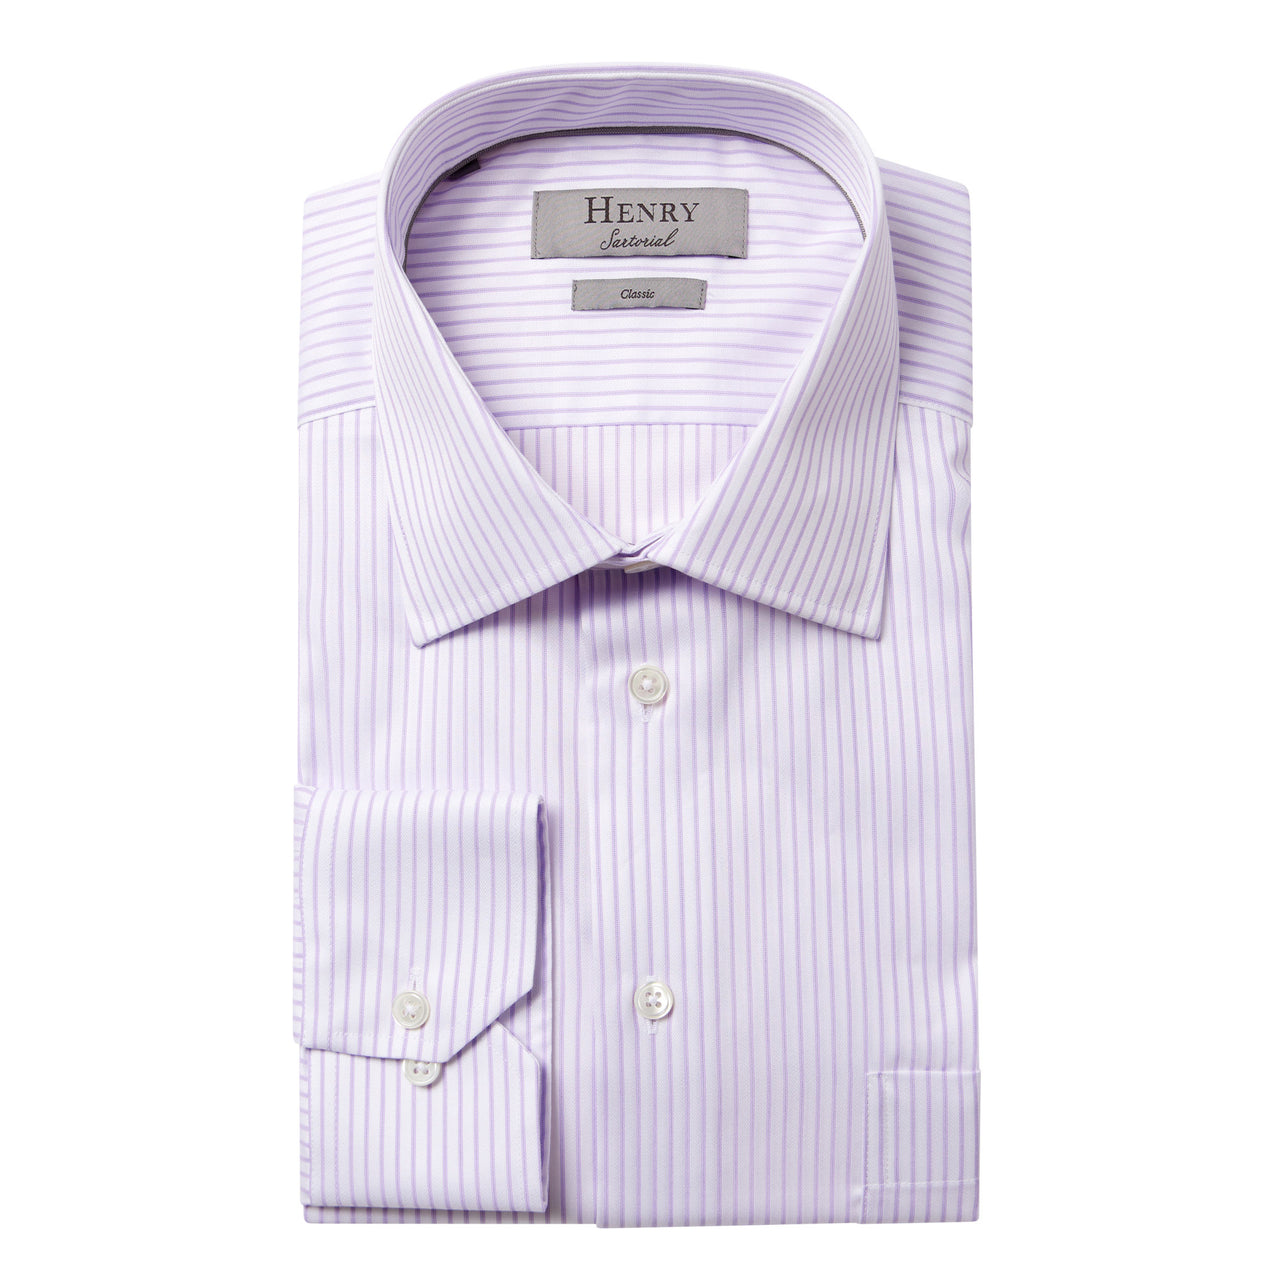 HENRY SARTORIAL Stripe Single Cuff Classic Fit Business Shirt PURPLE/WHITE